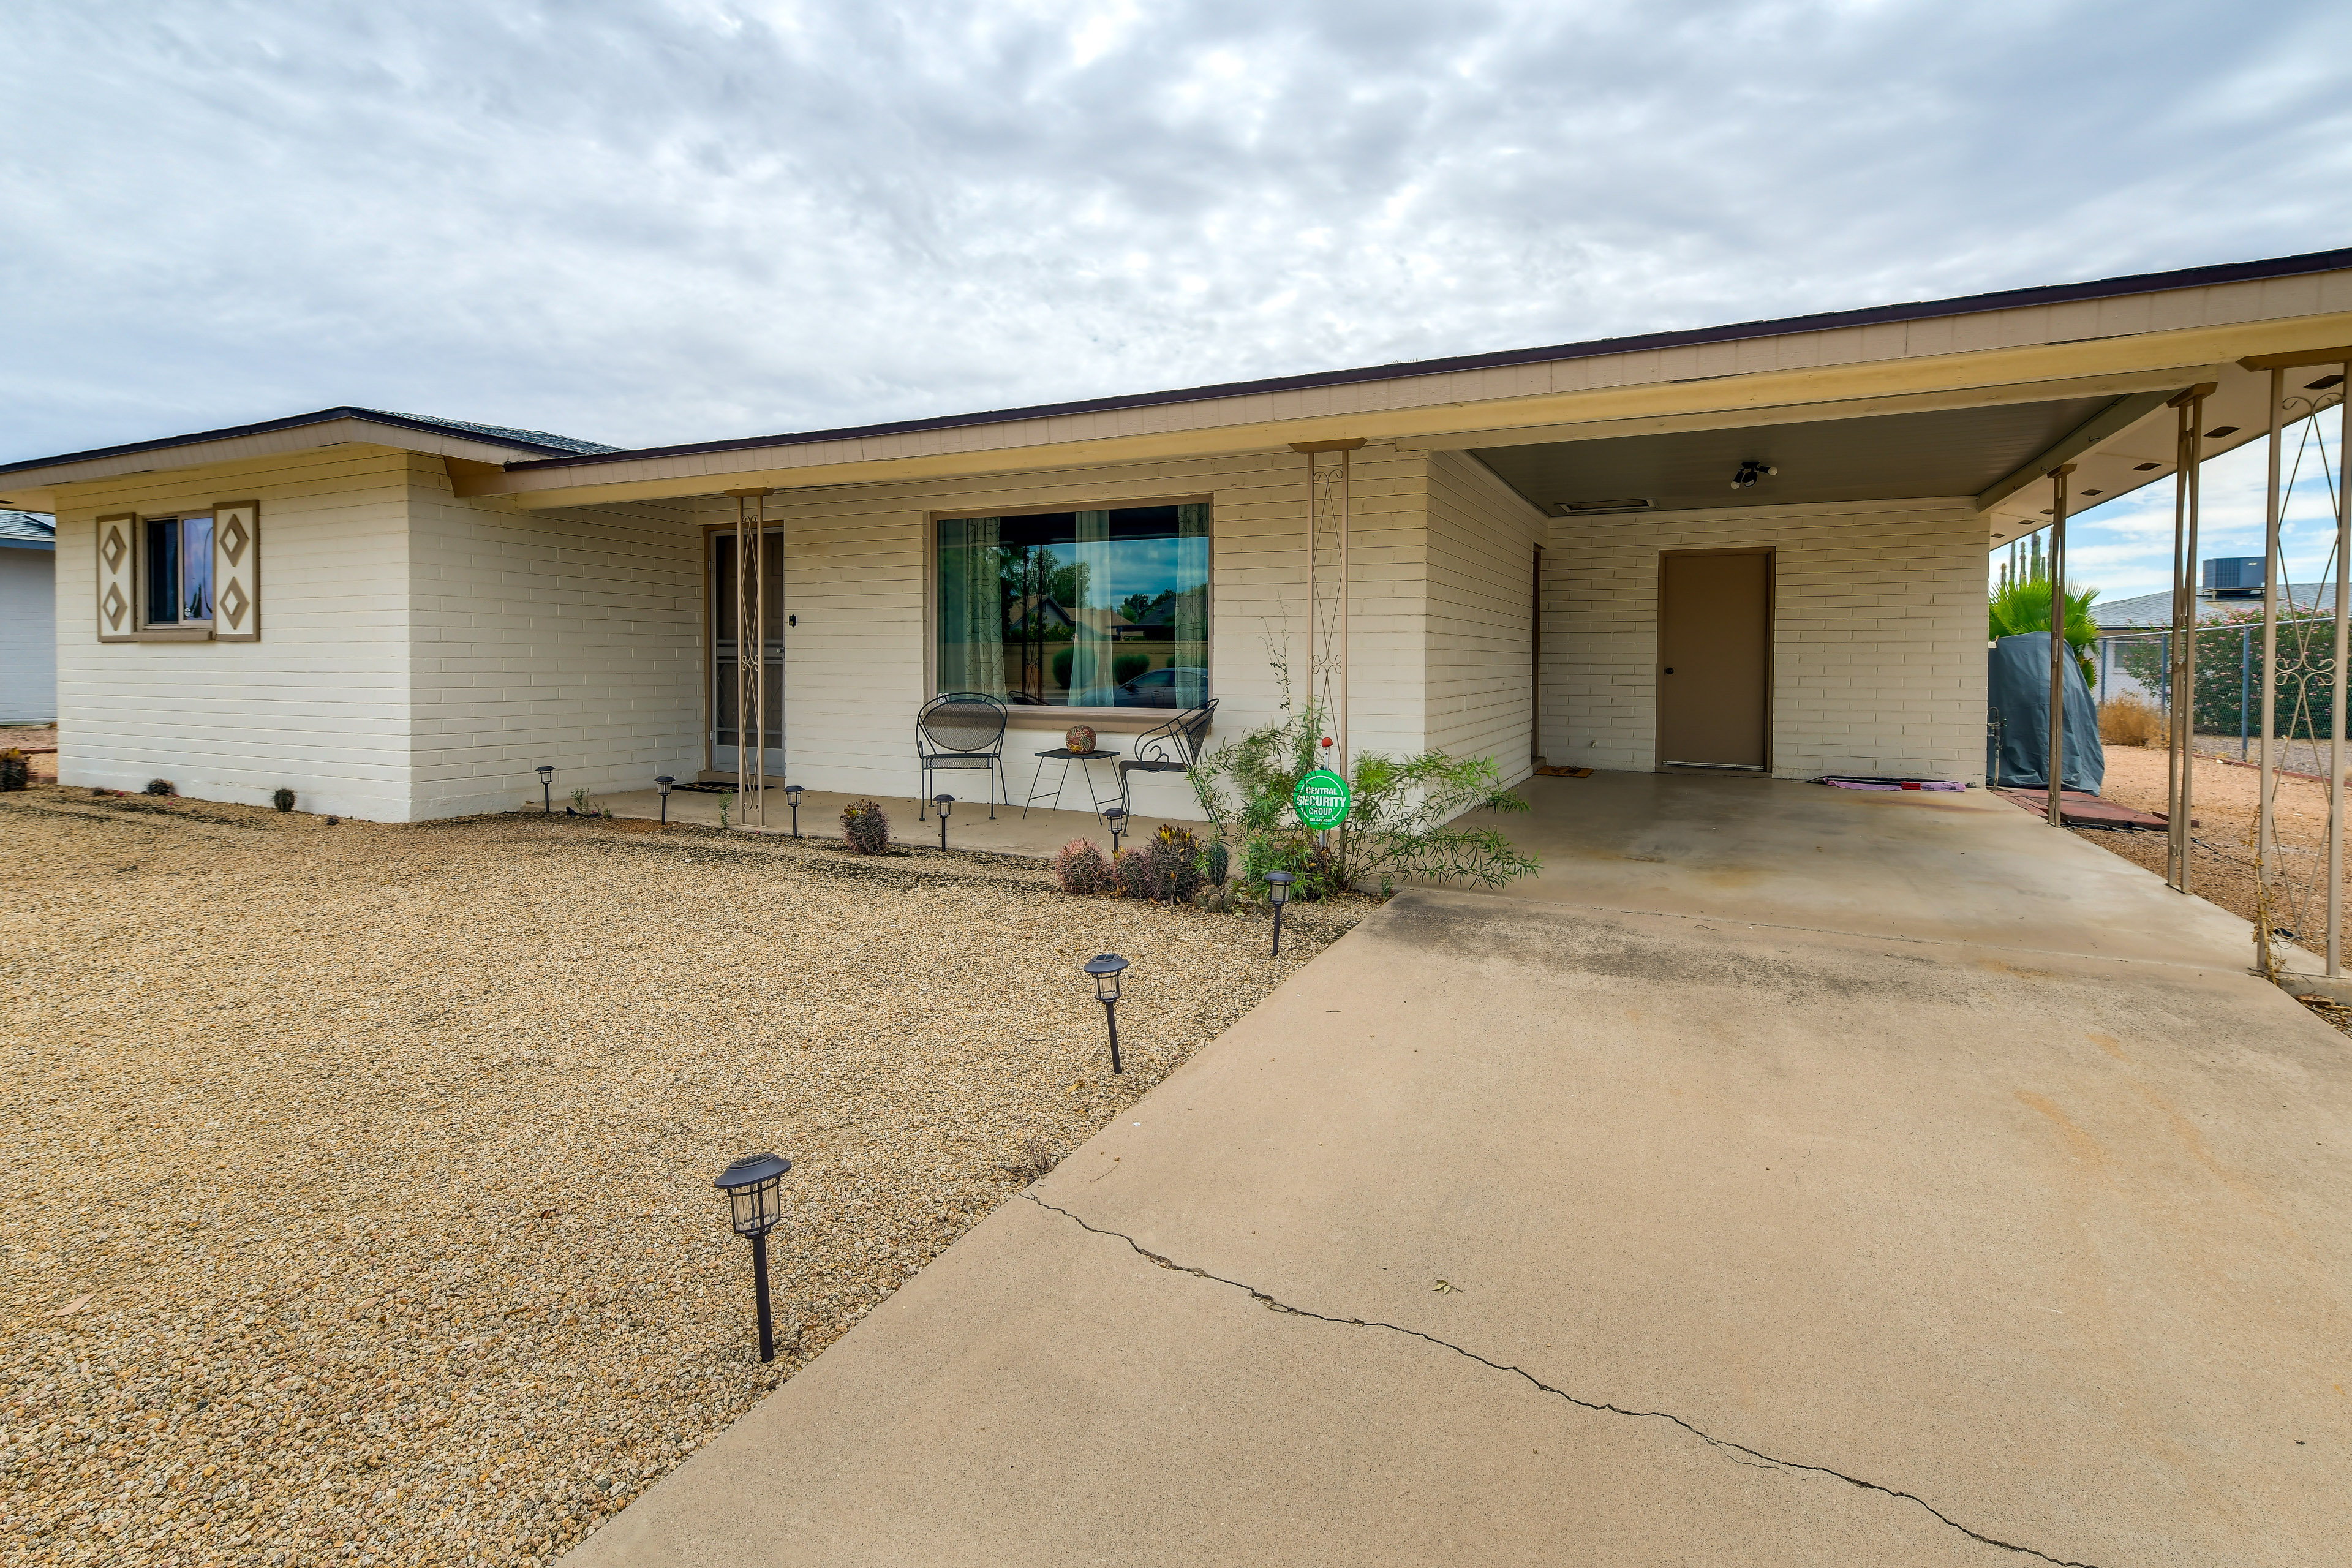 Desert Dreamin: Stylish Mesa Home, 55 + Community! - Houses for Rent in  Mesa, Arizona, United States - Airbnb